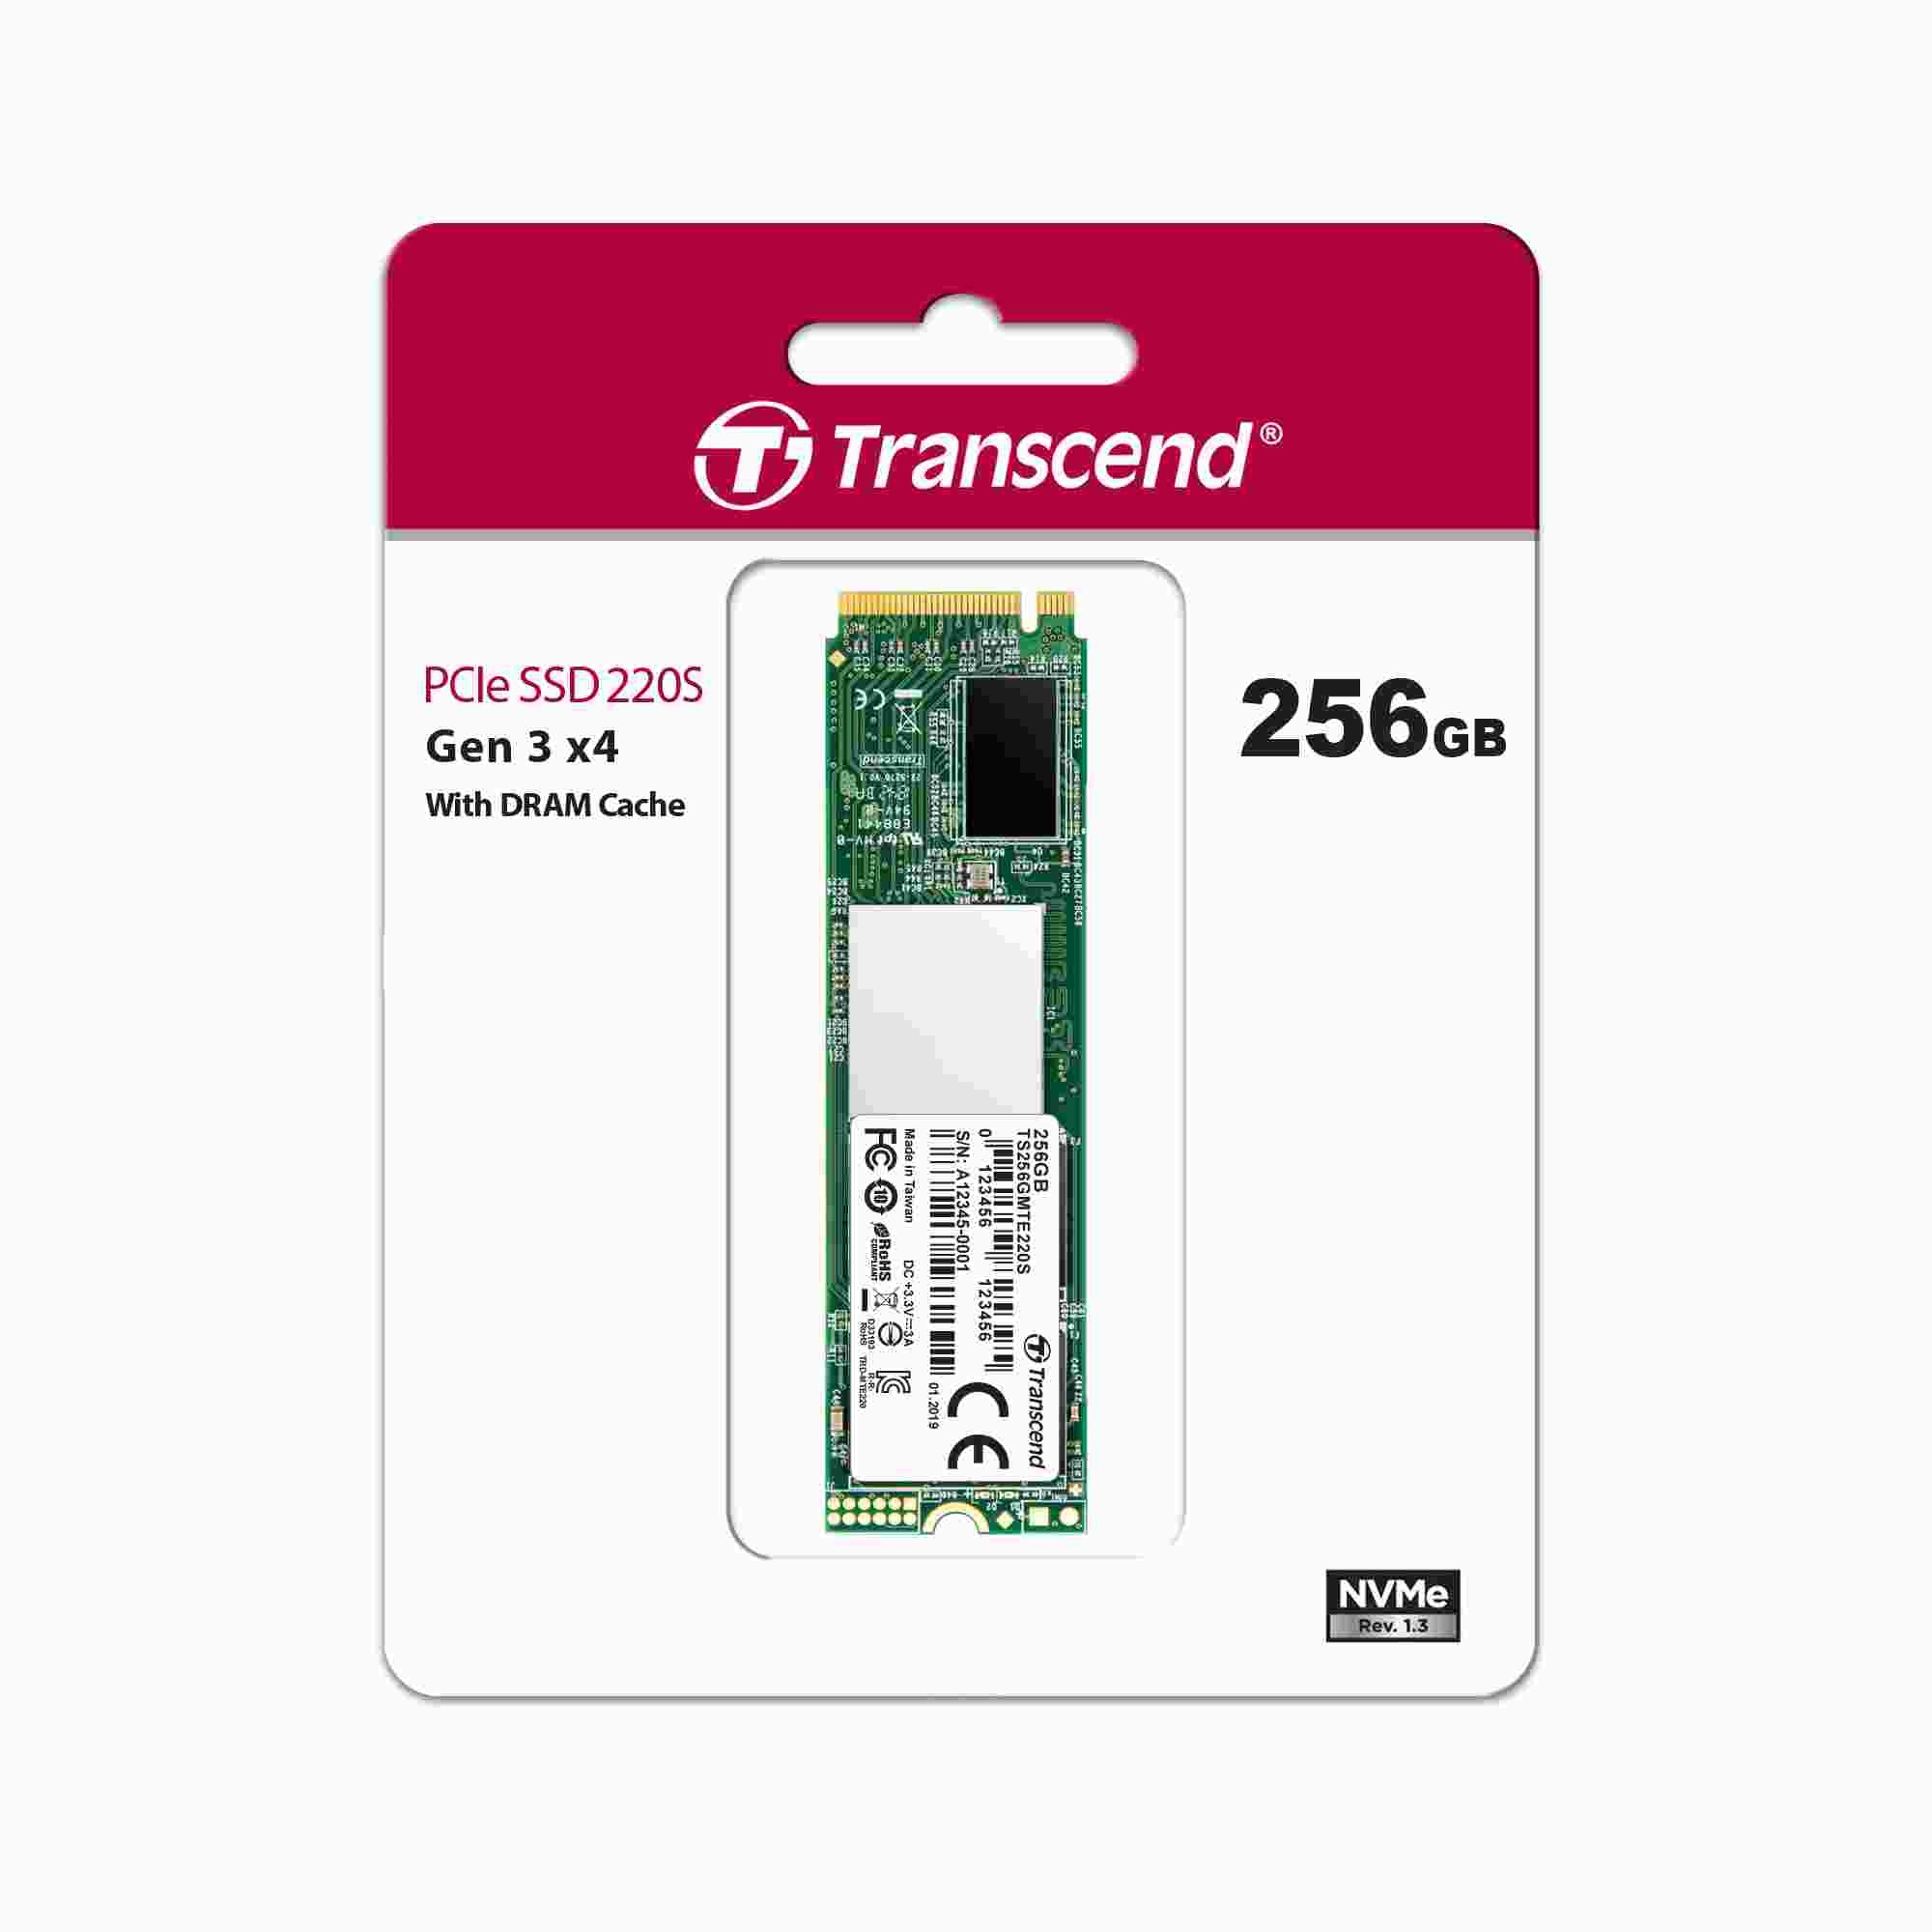 Transcend SSD Scope 4.18 for windows instal free